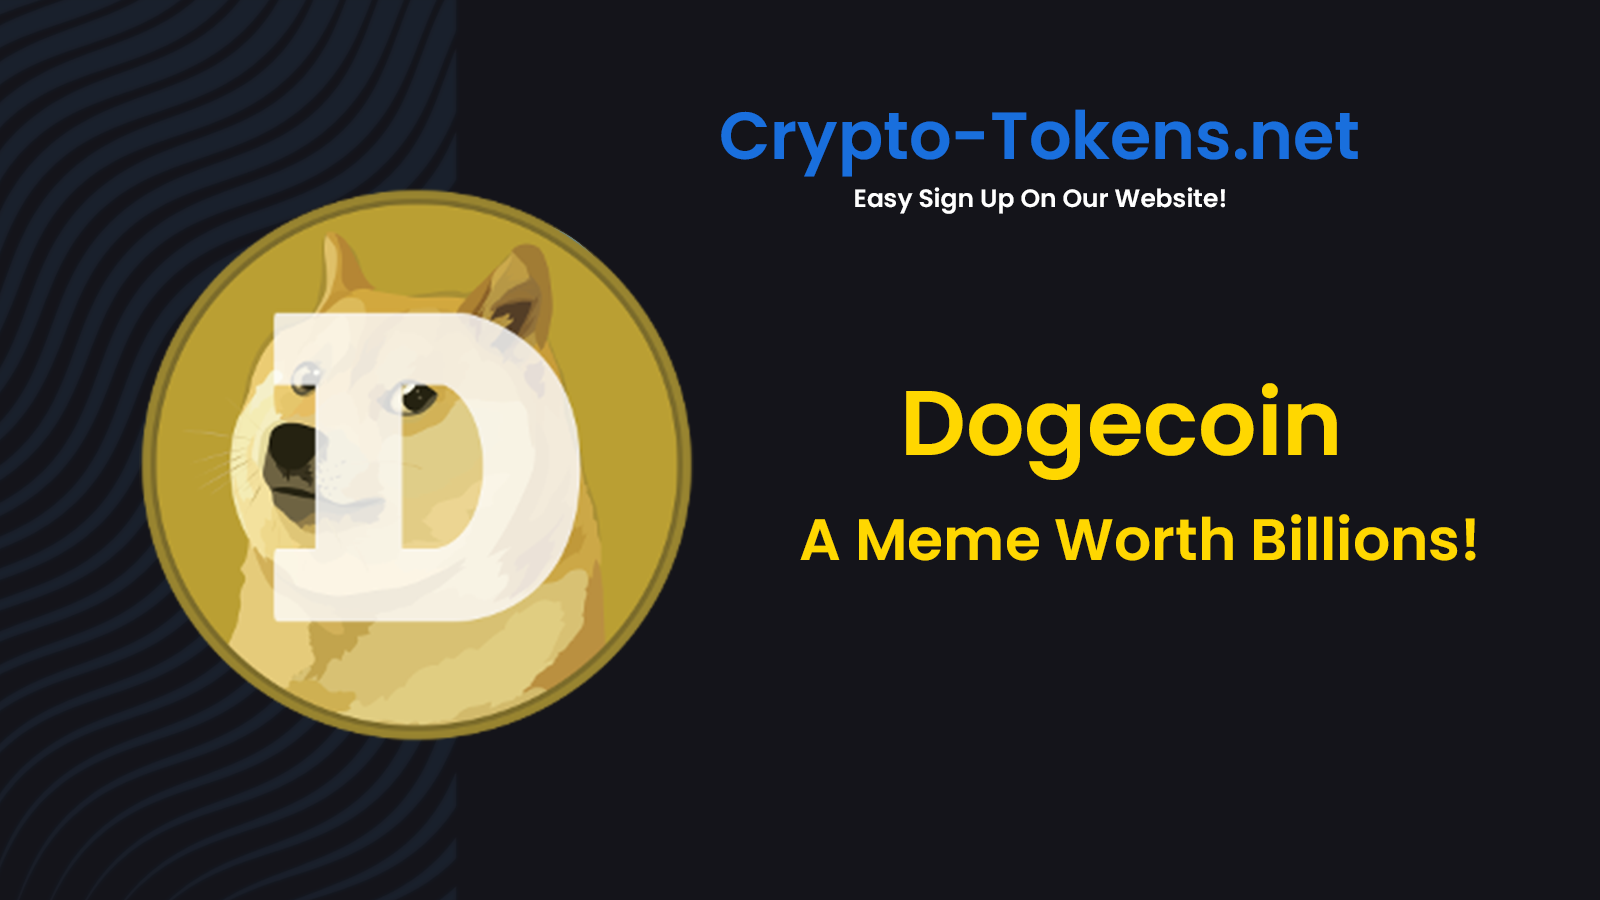 Dogecoin – A Meme Worth Billions